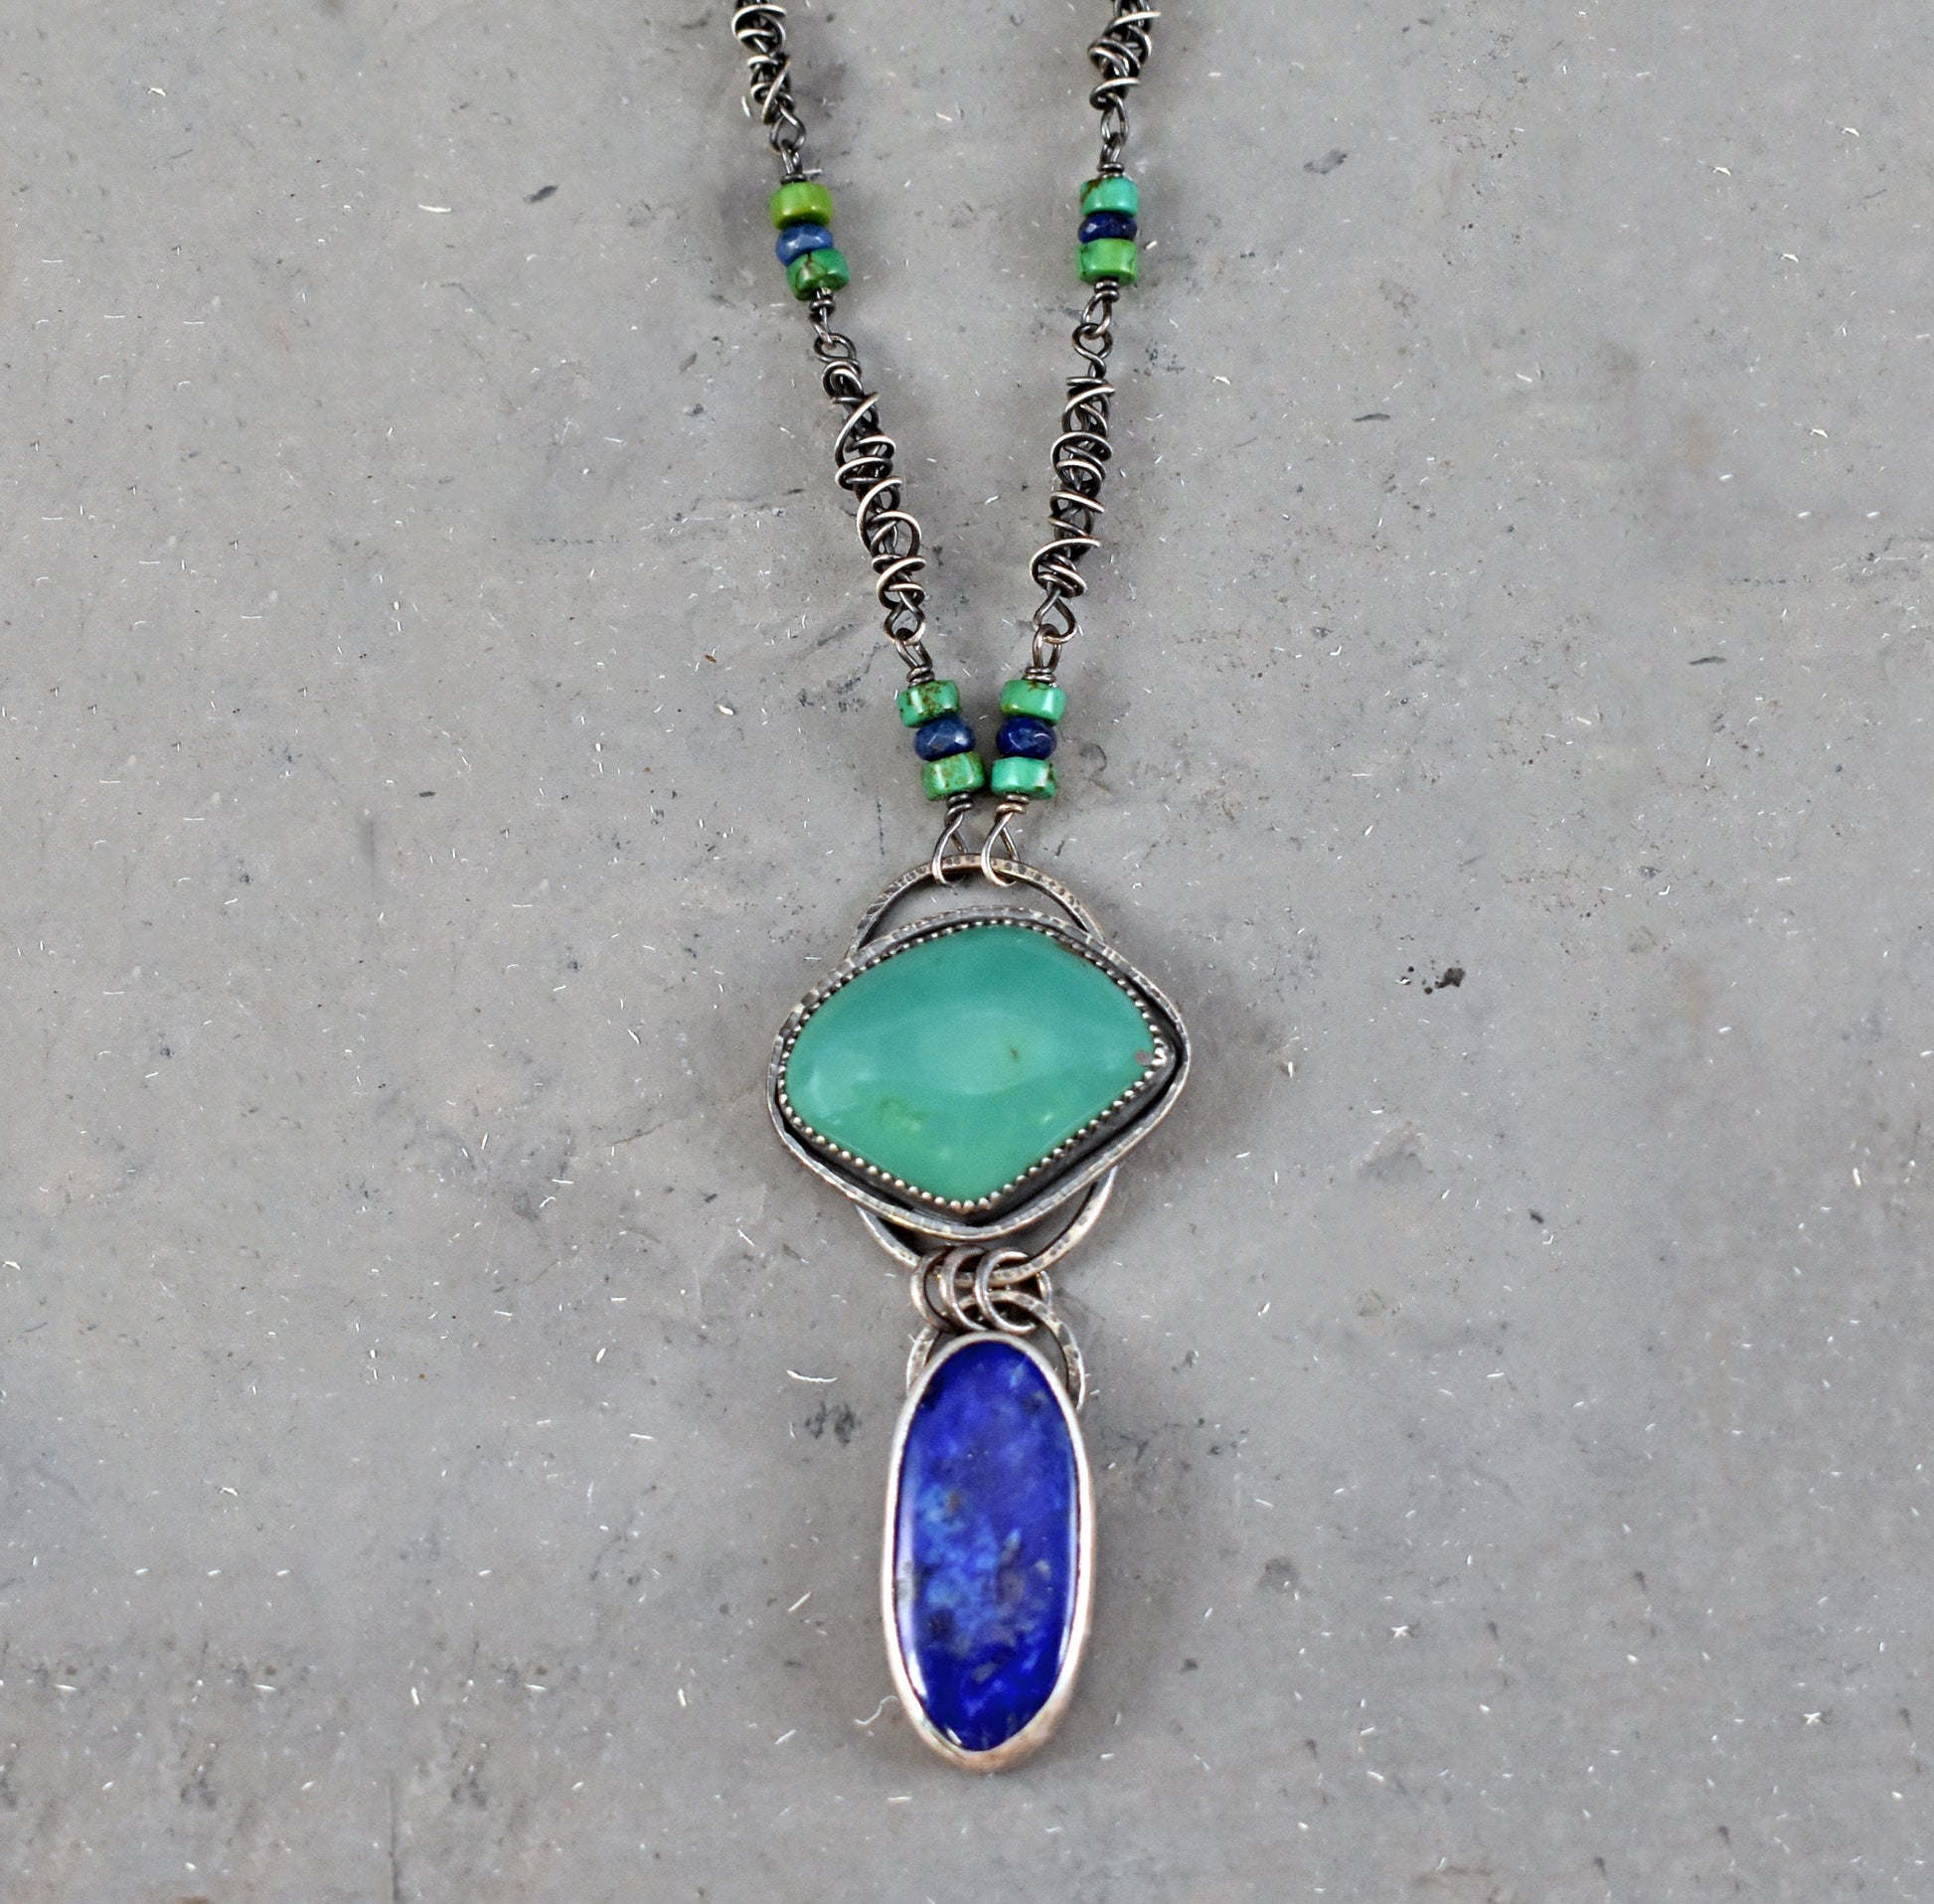 Turquoise Lapis Lazuli Necklace, Oxidized Sterling Silver Pendant, Organic Rustic Silversmith Boho Style Jewelry, Blue Green Gemstone